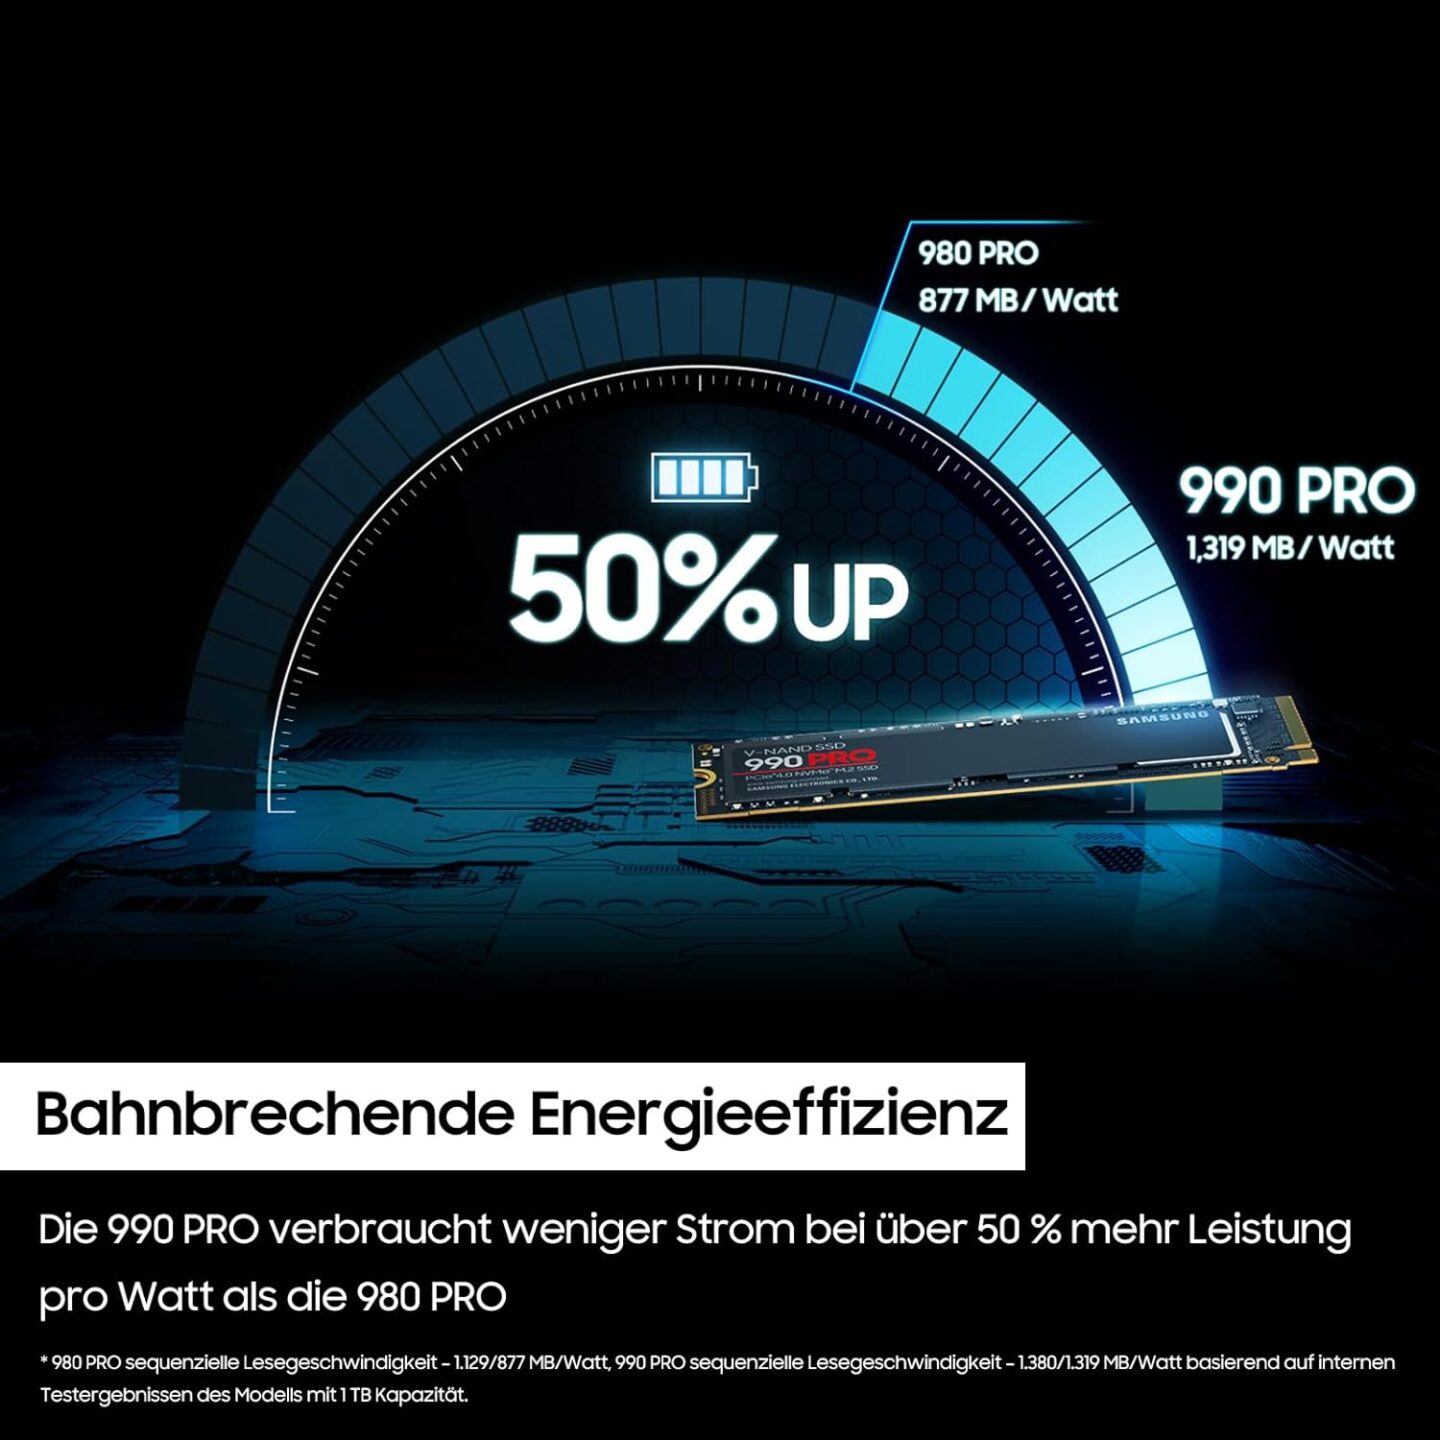 Samsung 990 PRO SSD 4TB